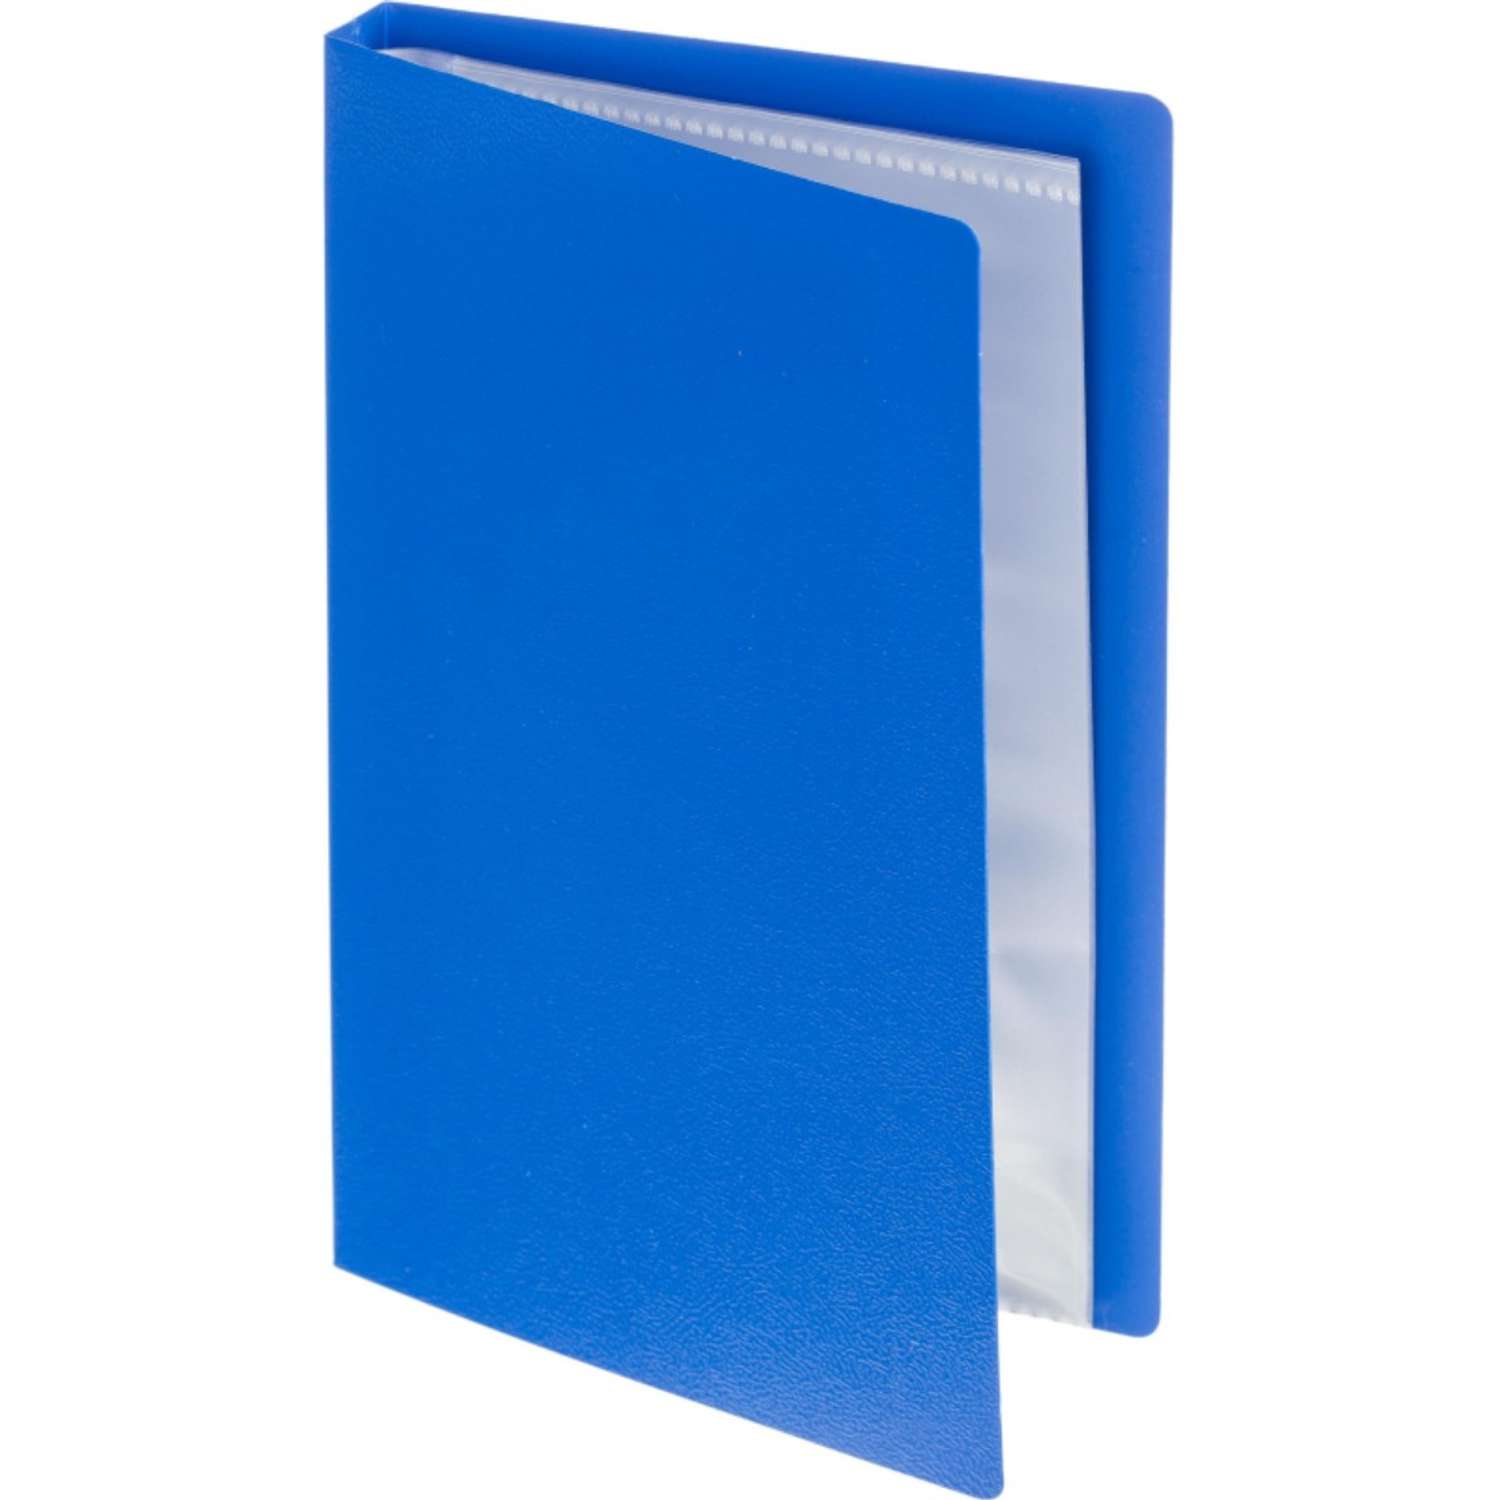 Визитница Attache Economy синий на 120 карточек 2 упаковки по 5 штук - фото 3